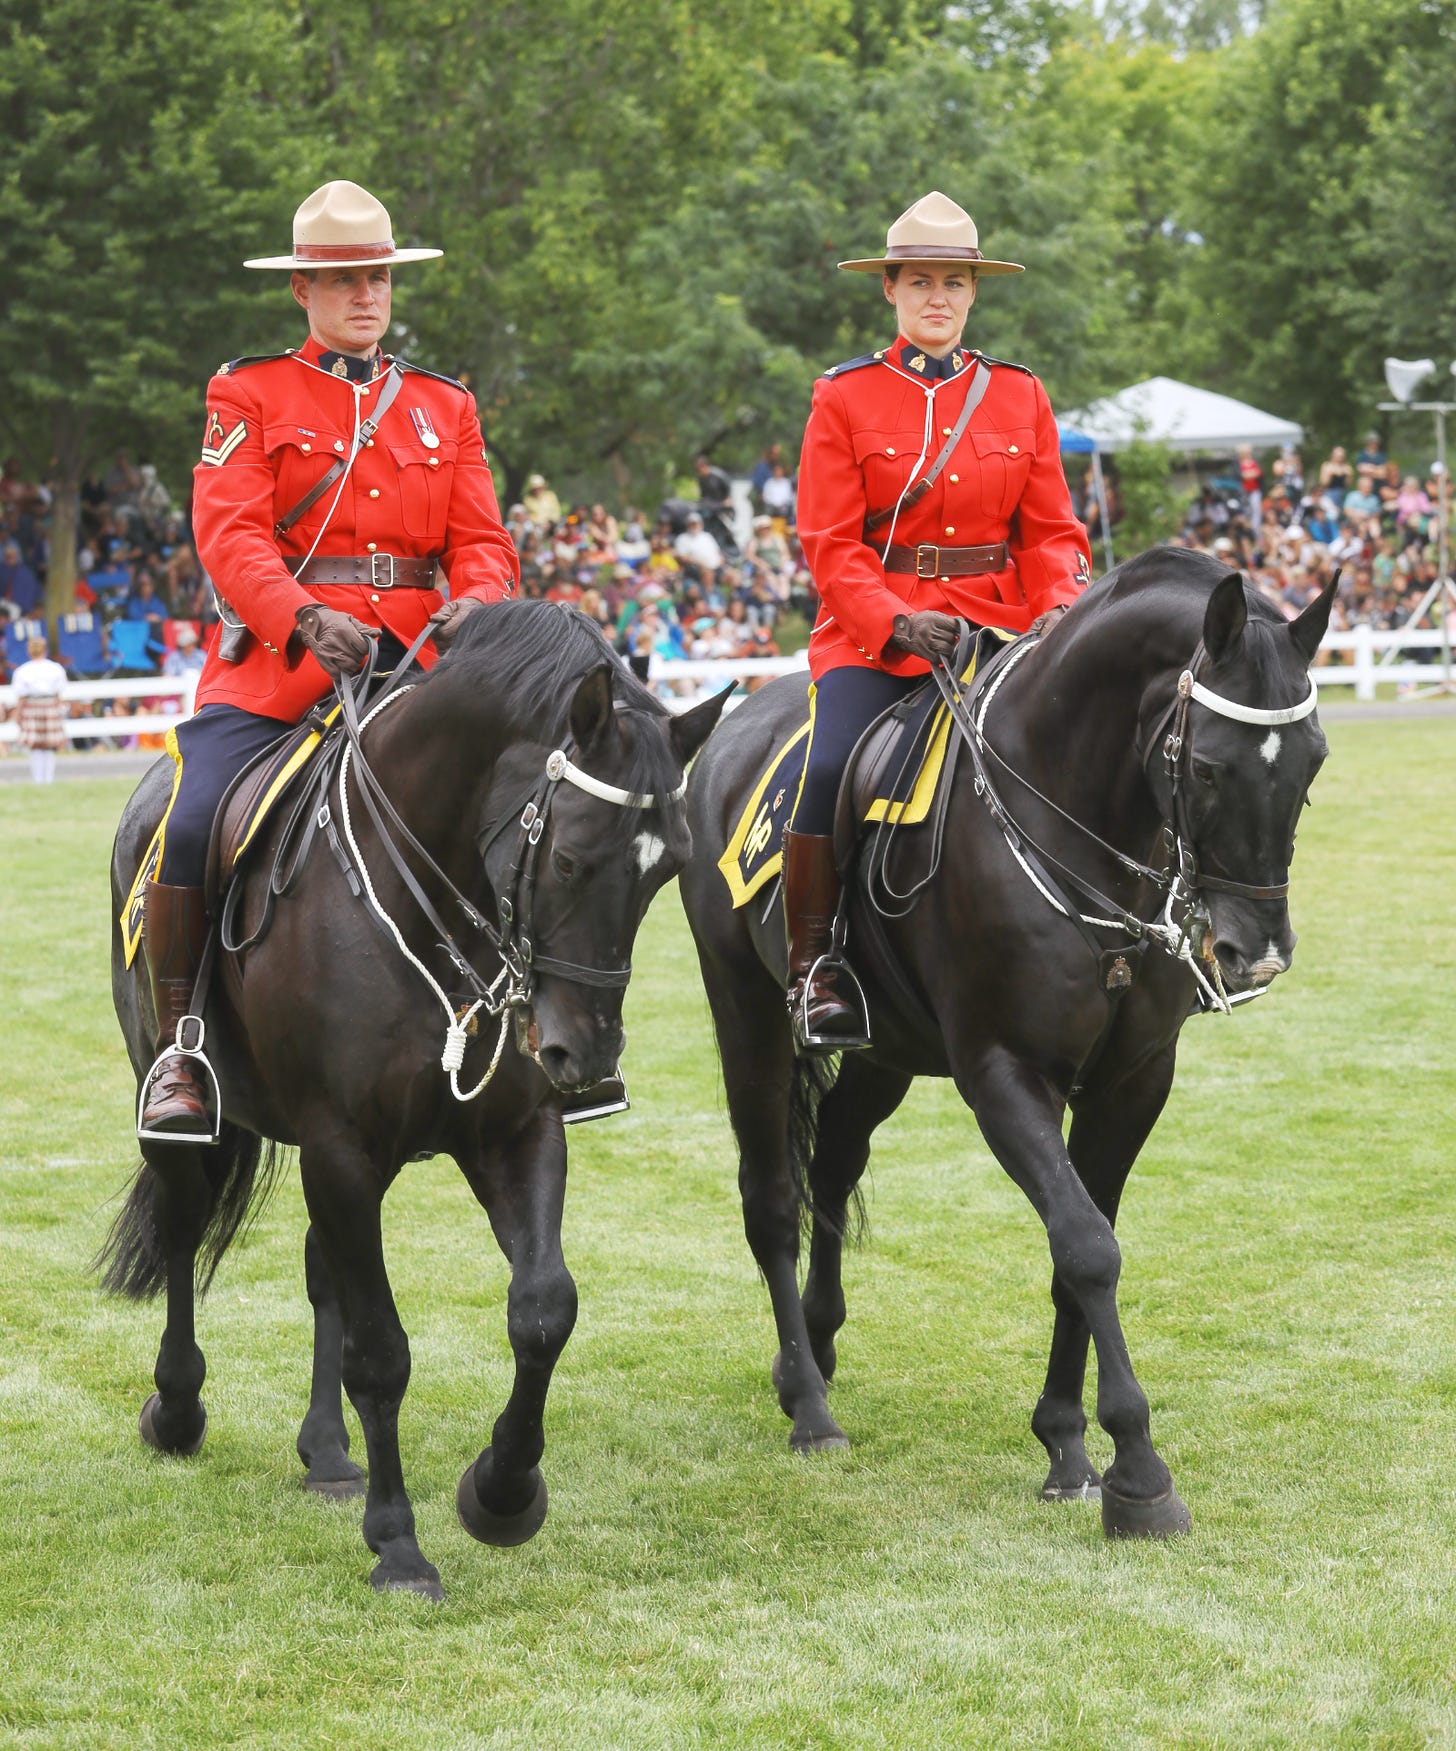 Two RCMP officers on horseback